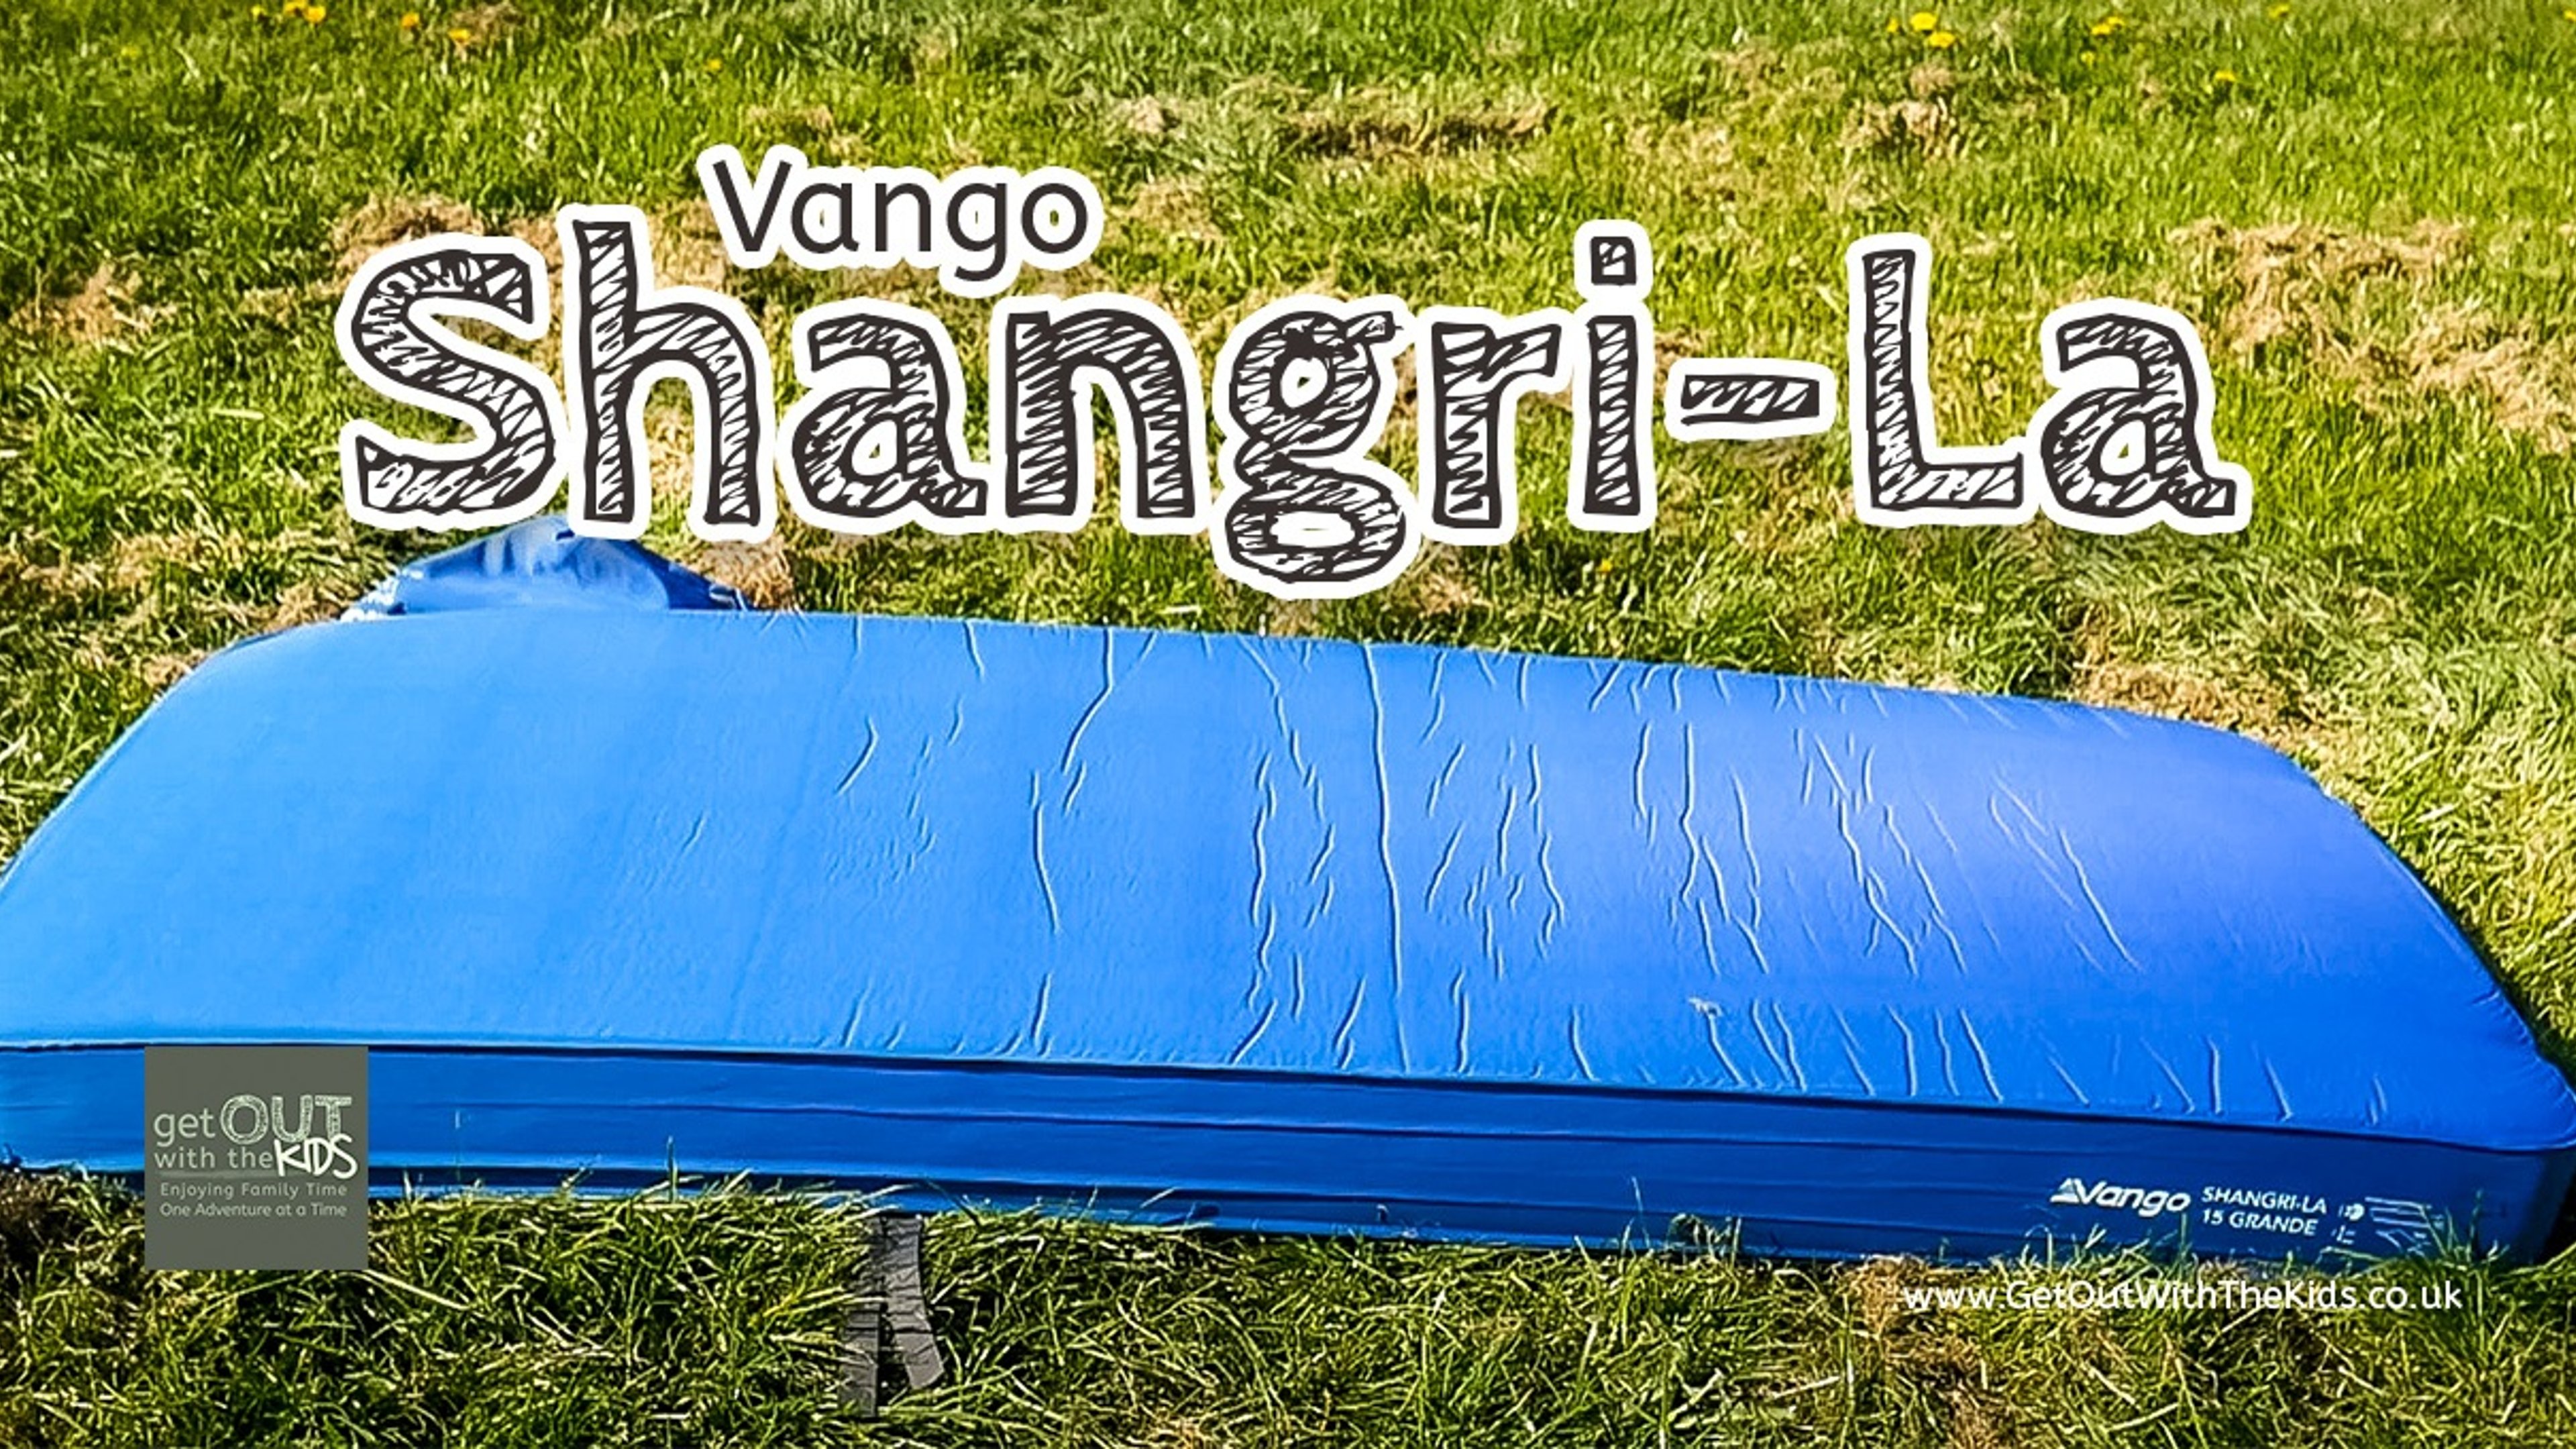 Vango Shangria-La Self Inflating Mat